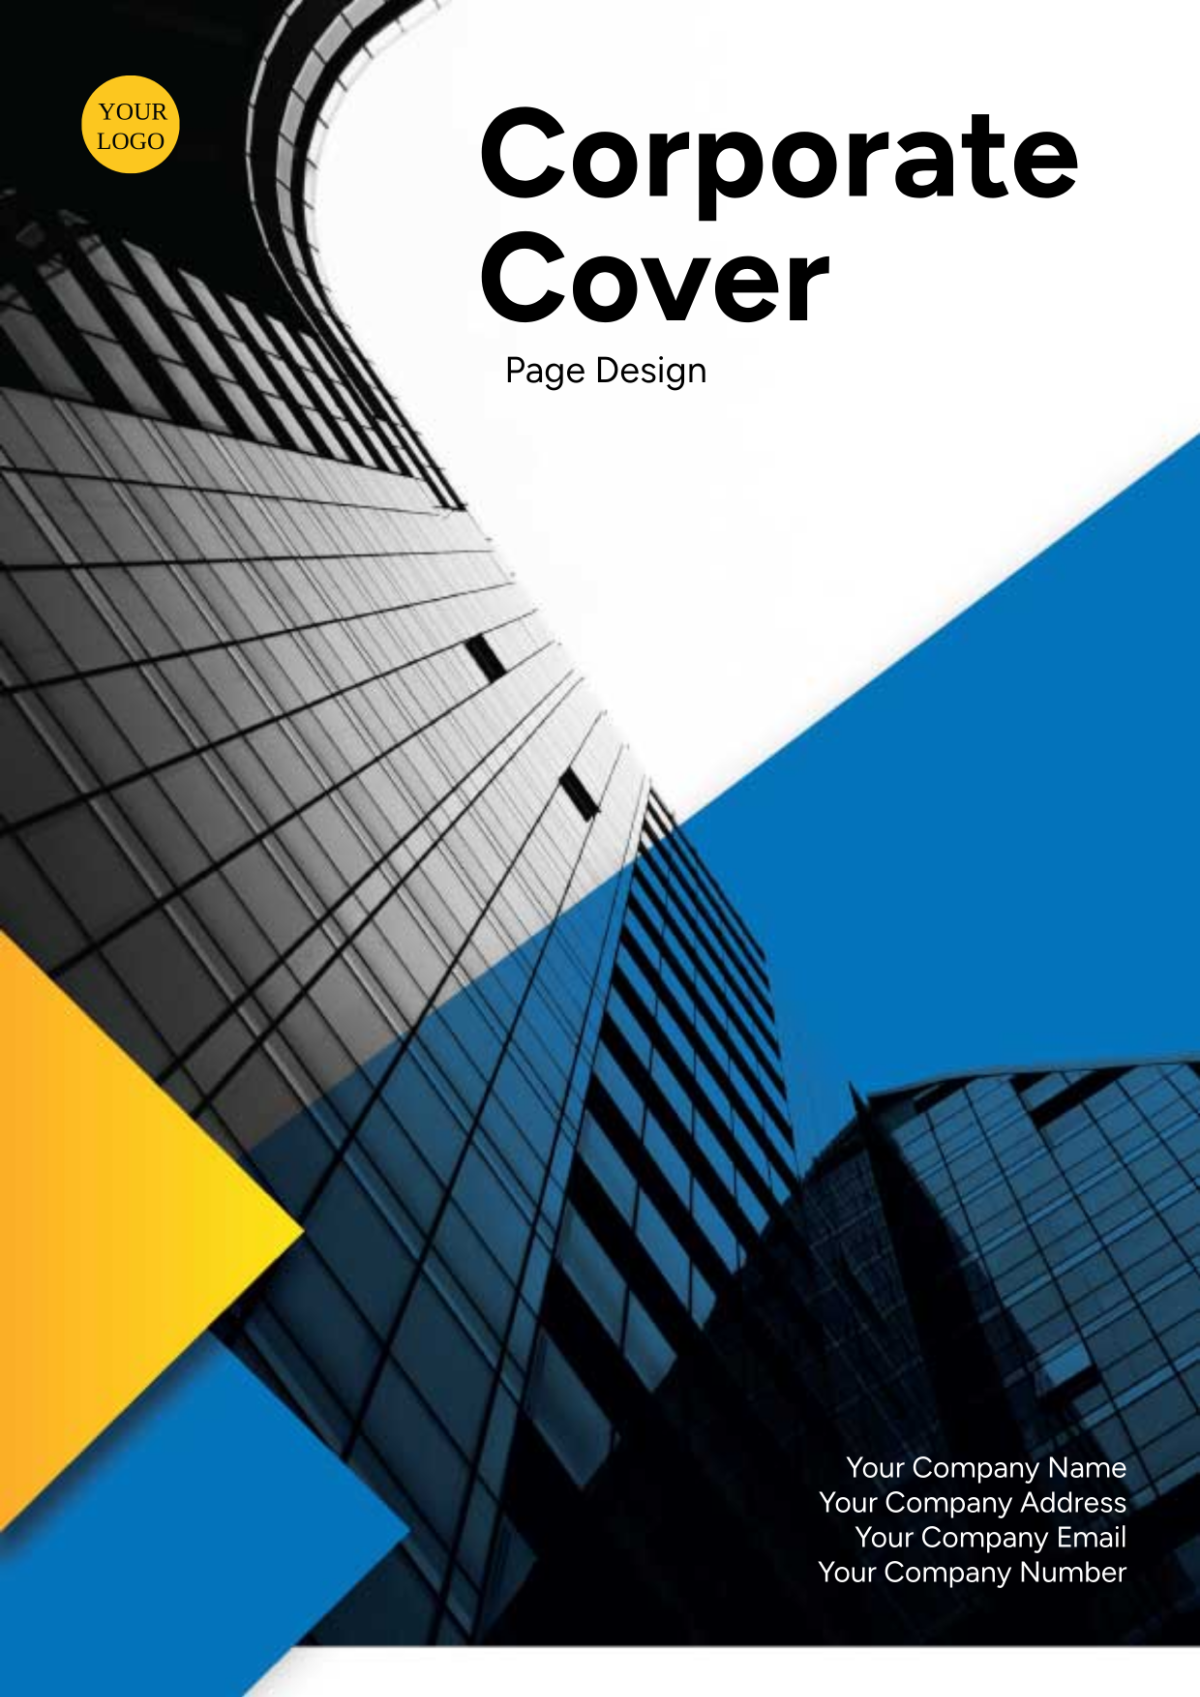 Corporate Cover Page Design